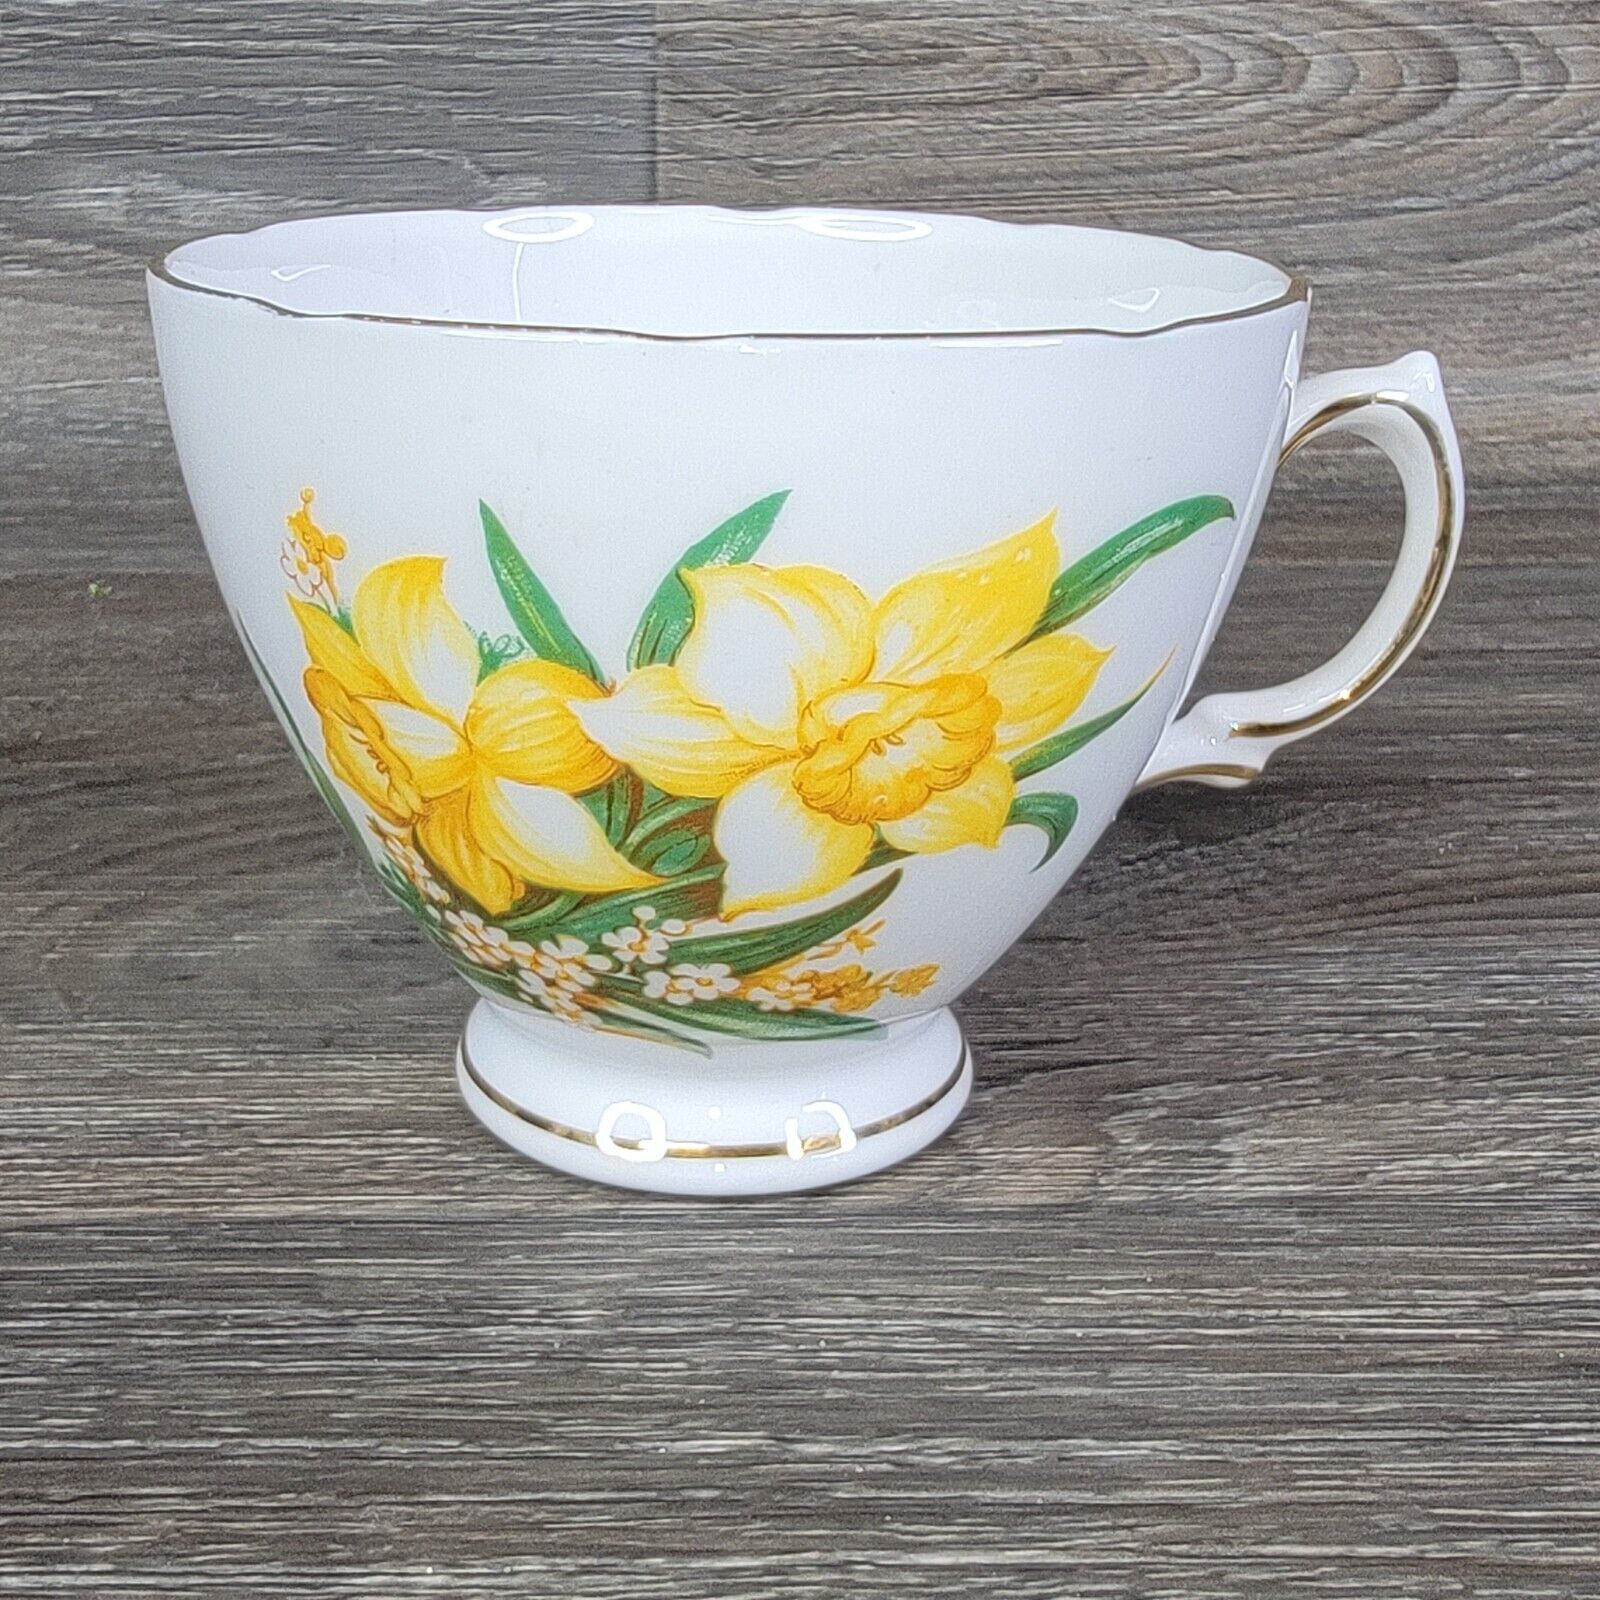 Vintage Royal Vale Bone China Yellow Daffodil Flower Tea Cup 1960s England